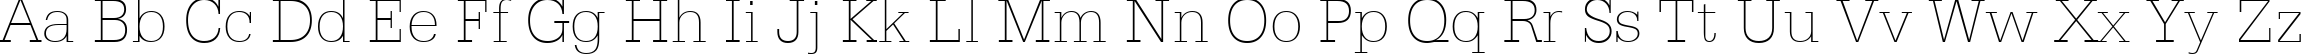 Пример написания английского алфавита шрифтом Serifa Thin BT